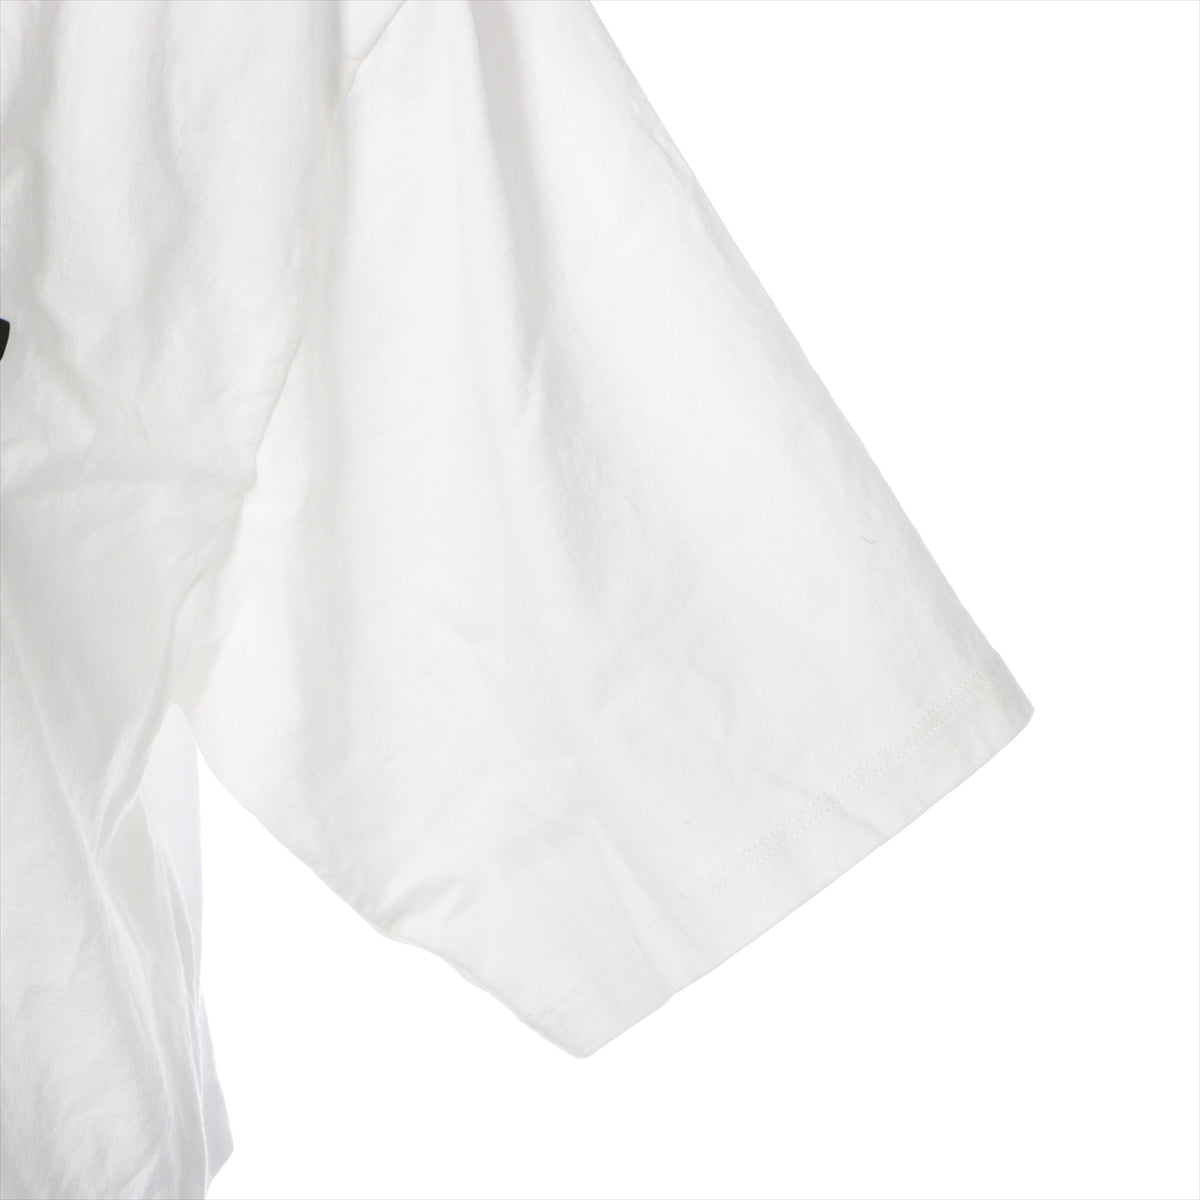 CELINE Cotton T-shirt L Ladies' White  Eddie period 2X761671Q cropped